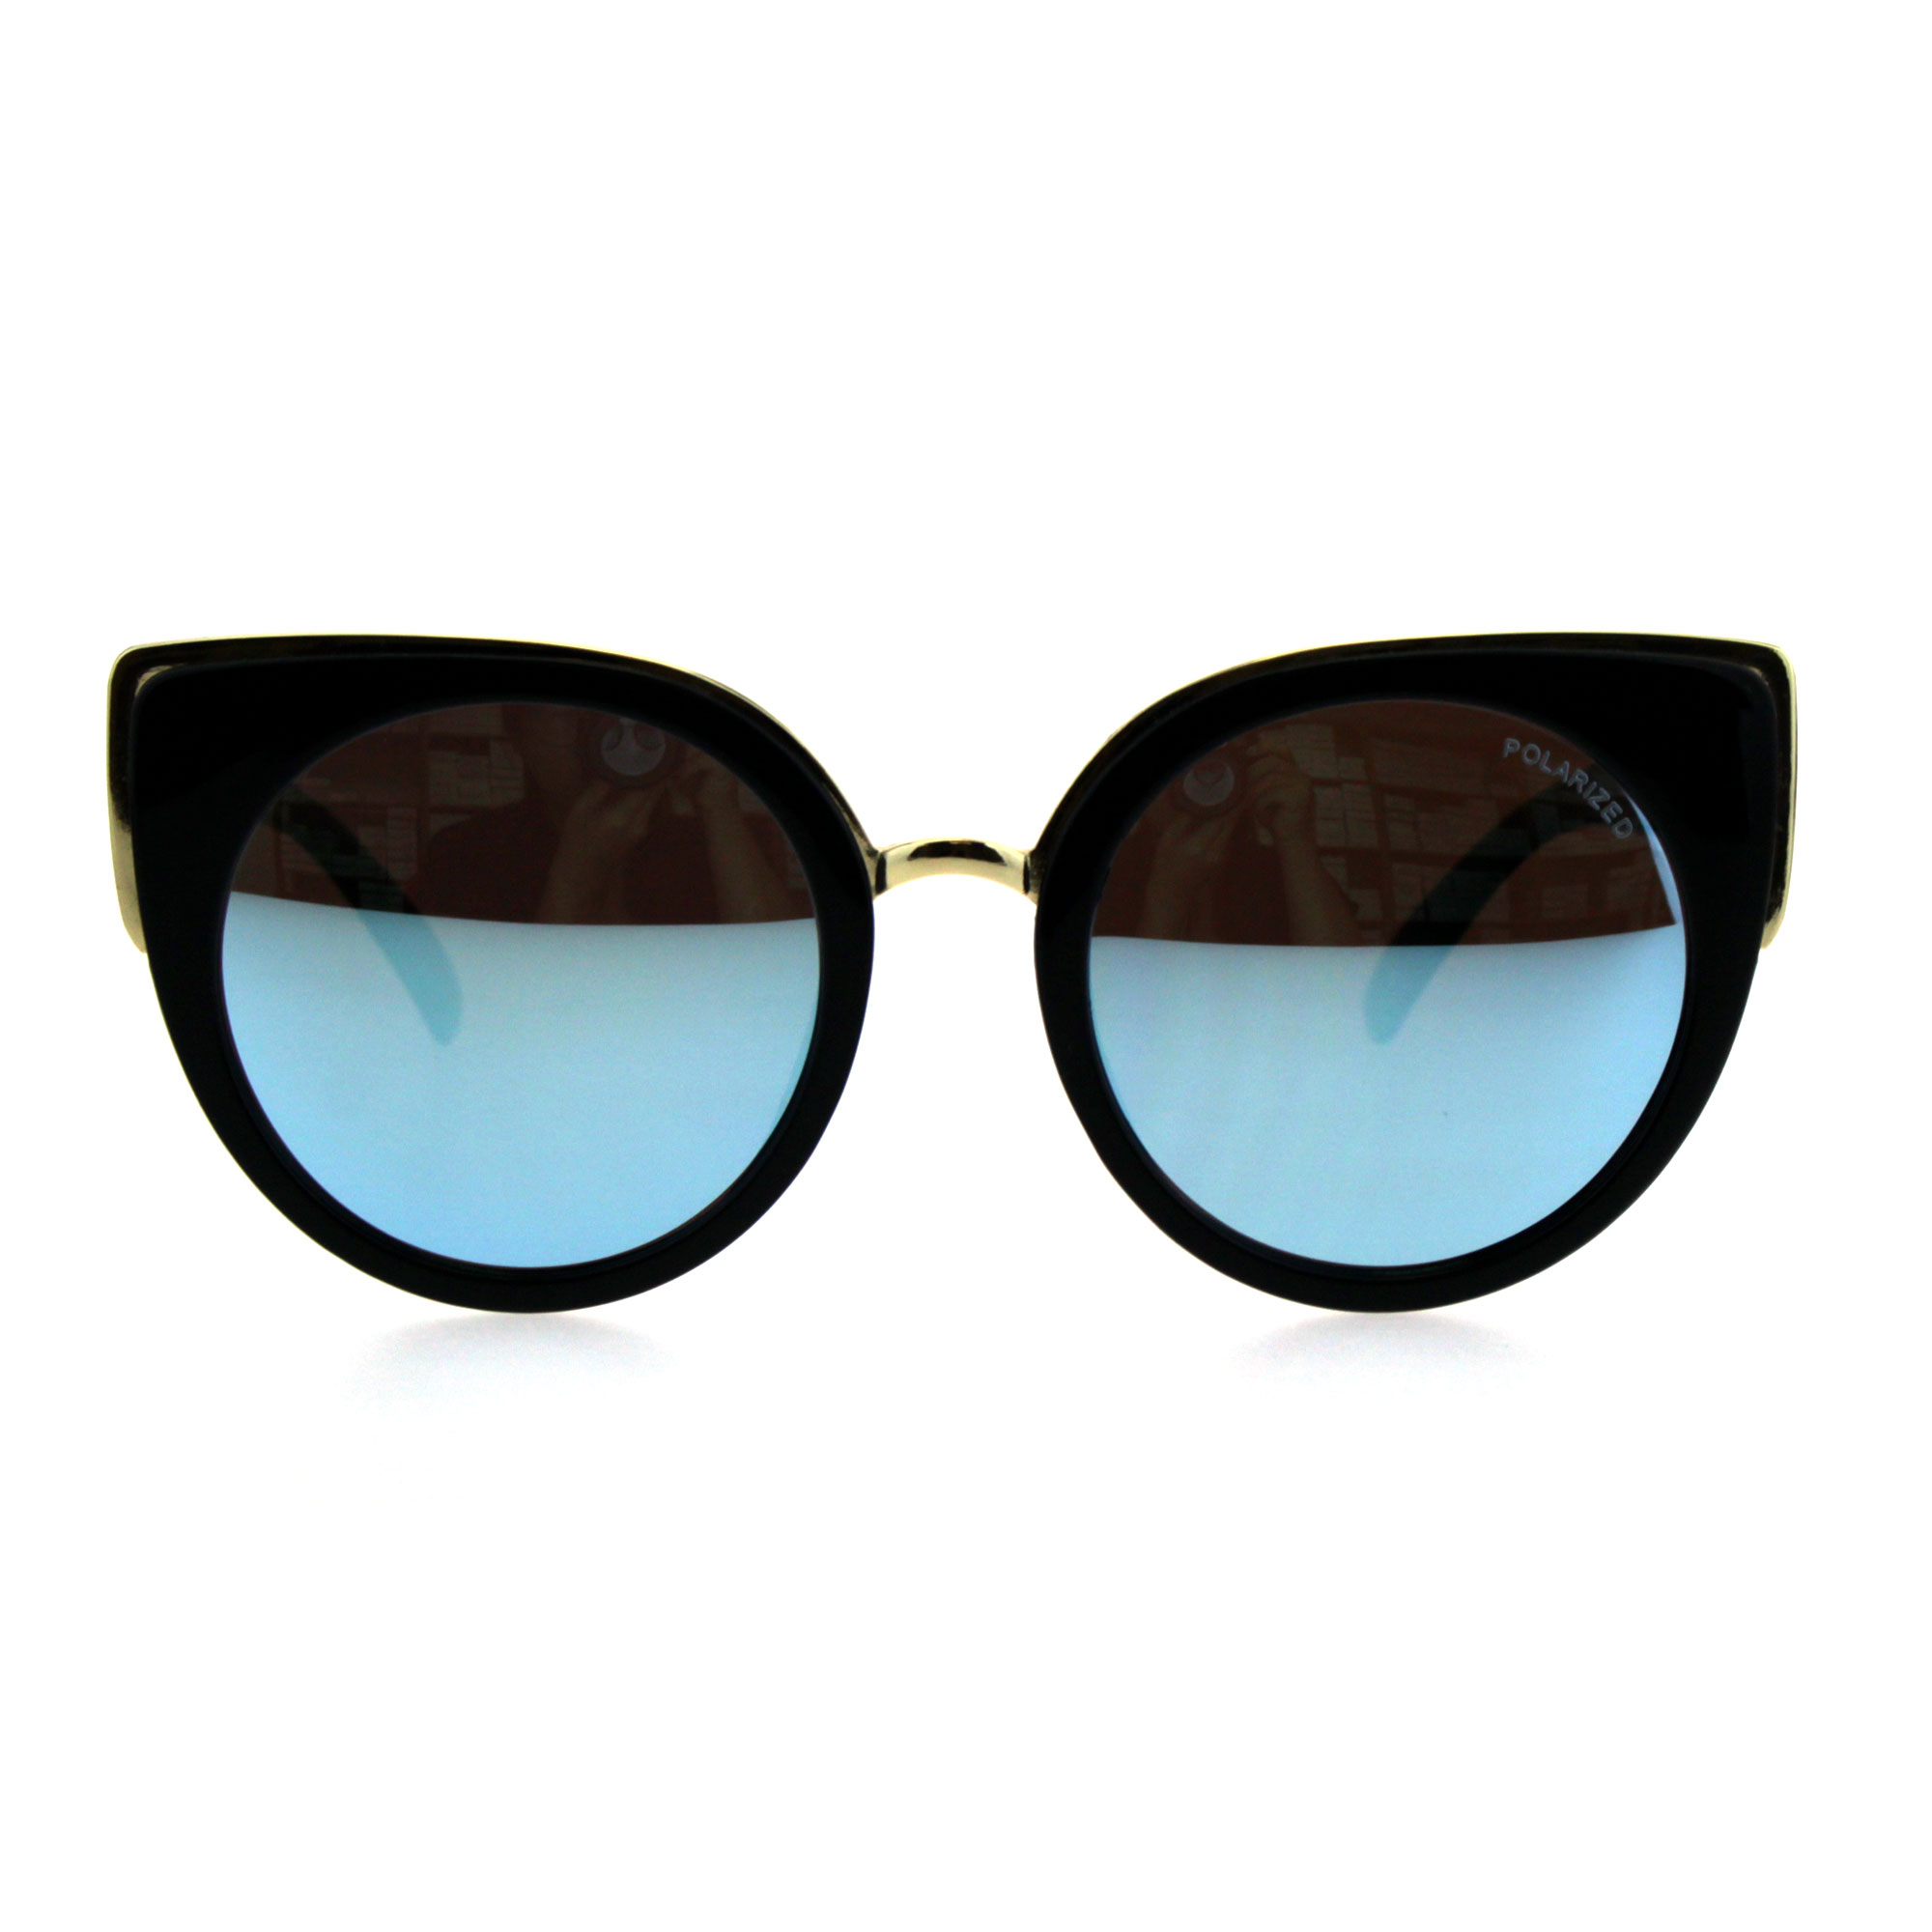 Womens Polarized Lens Mod Goth Cat Eye Fashion Retro Sunglasses Black Blue Mirror - image 1 of 3